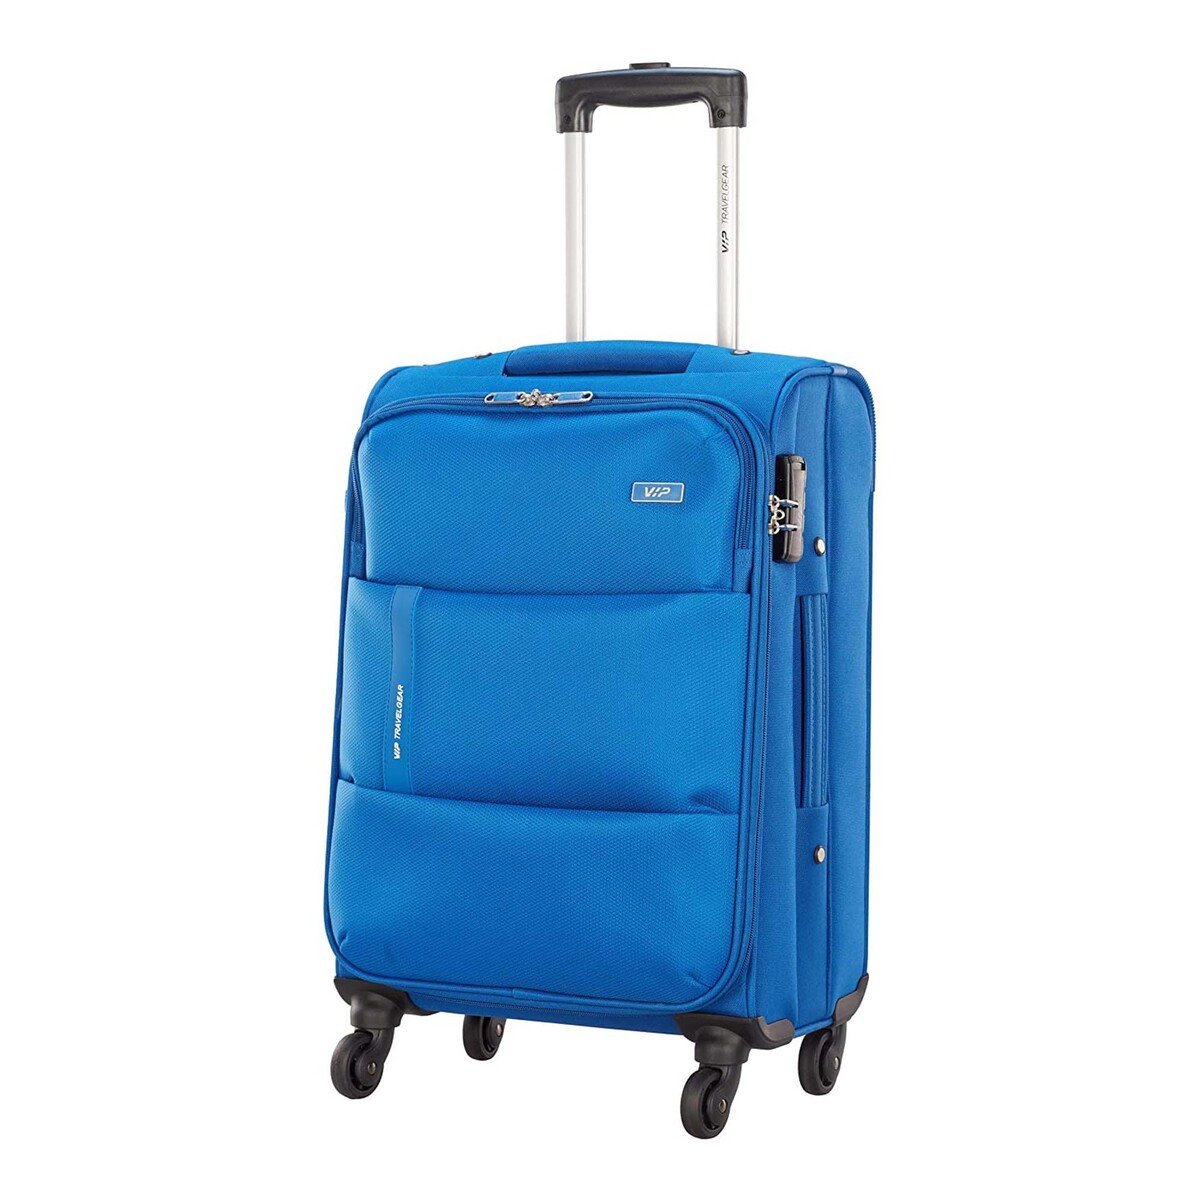 VIP Widget 4 Wheel Soft Trolley, 79 cm, Blue